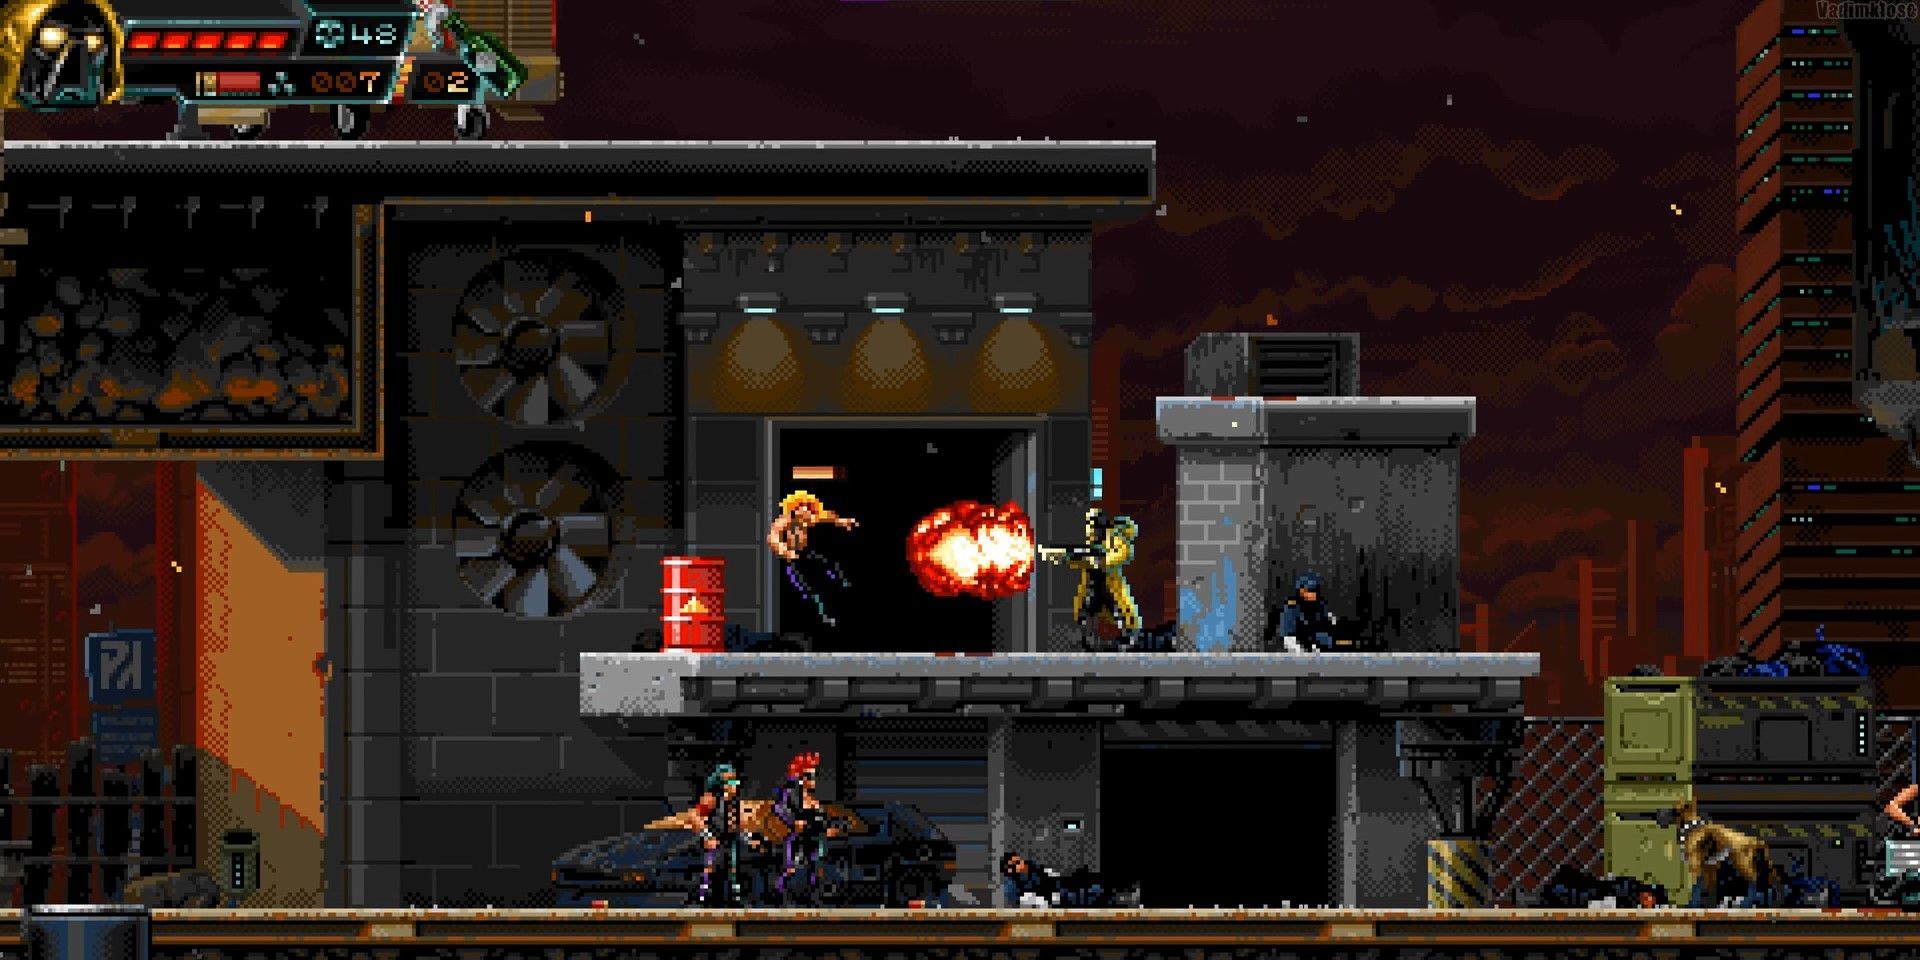 A screenshot from Huntdown Cyberpunk Adventure